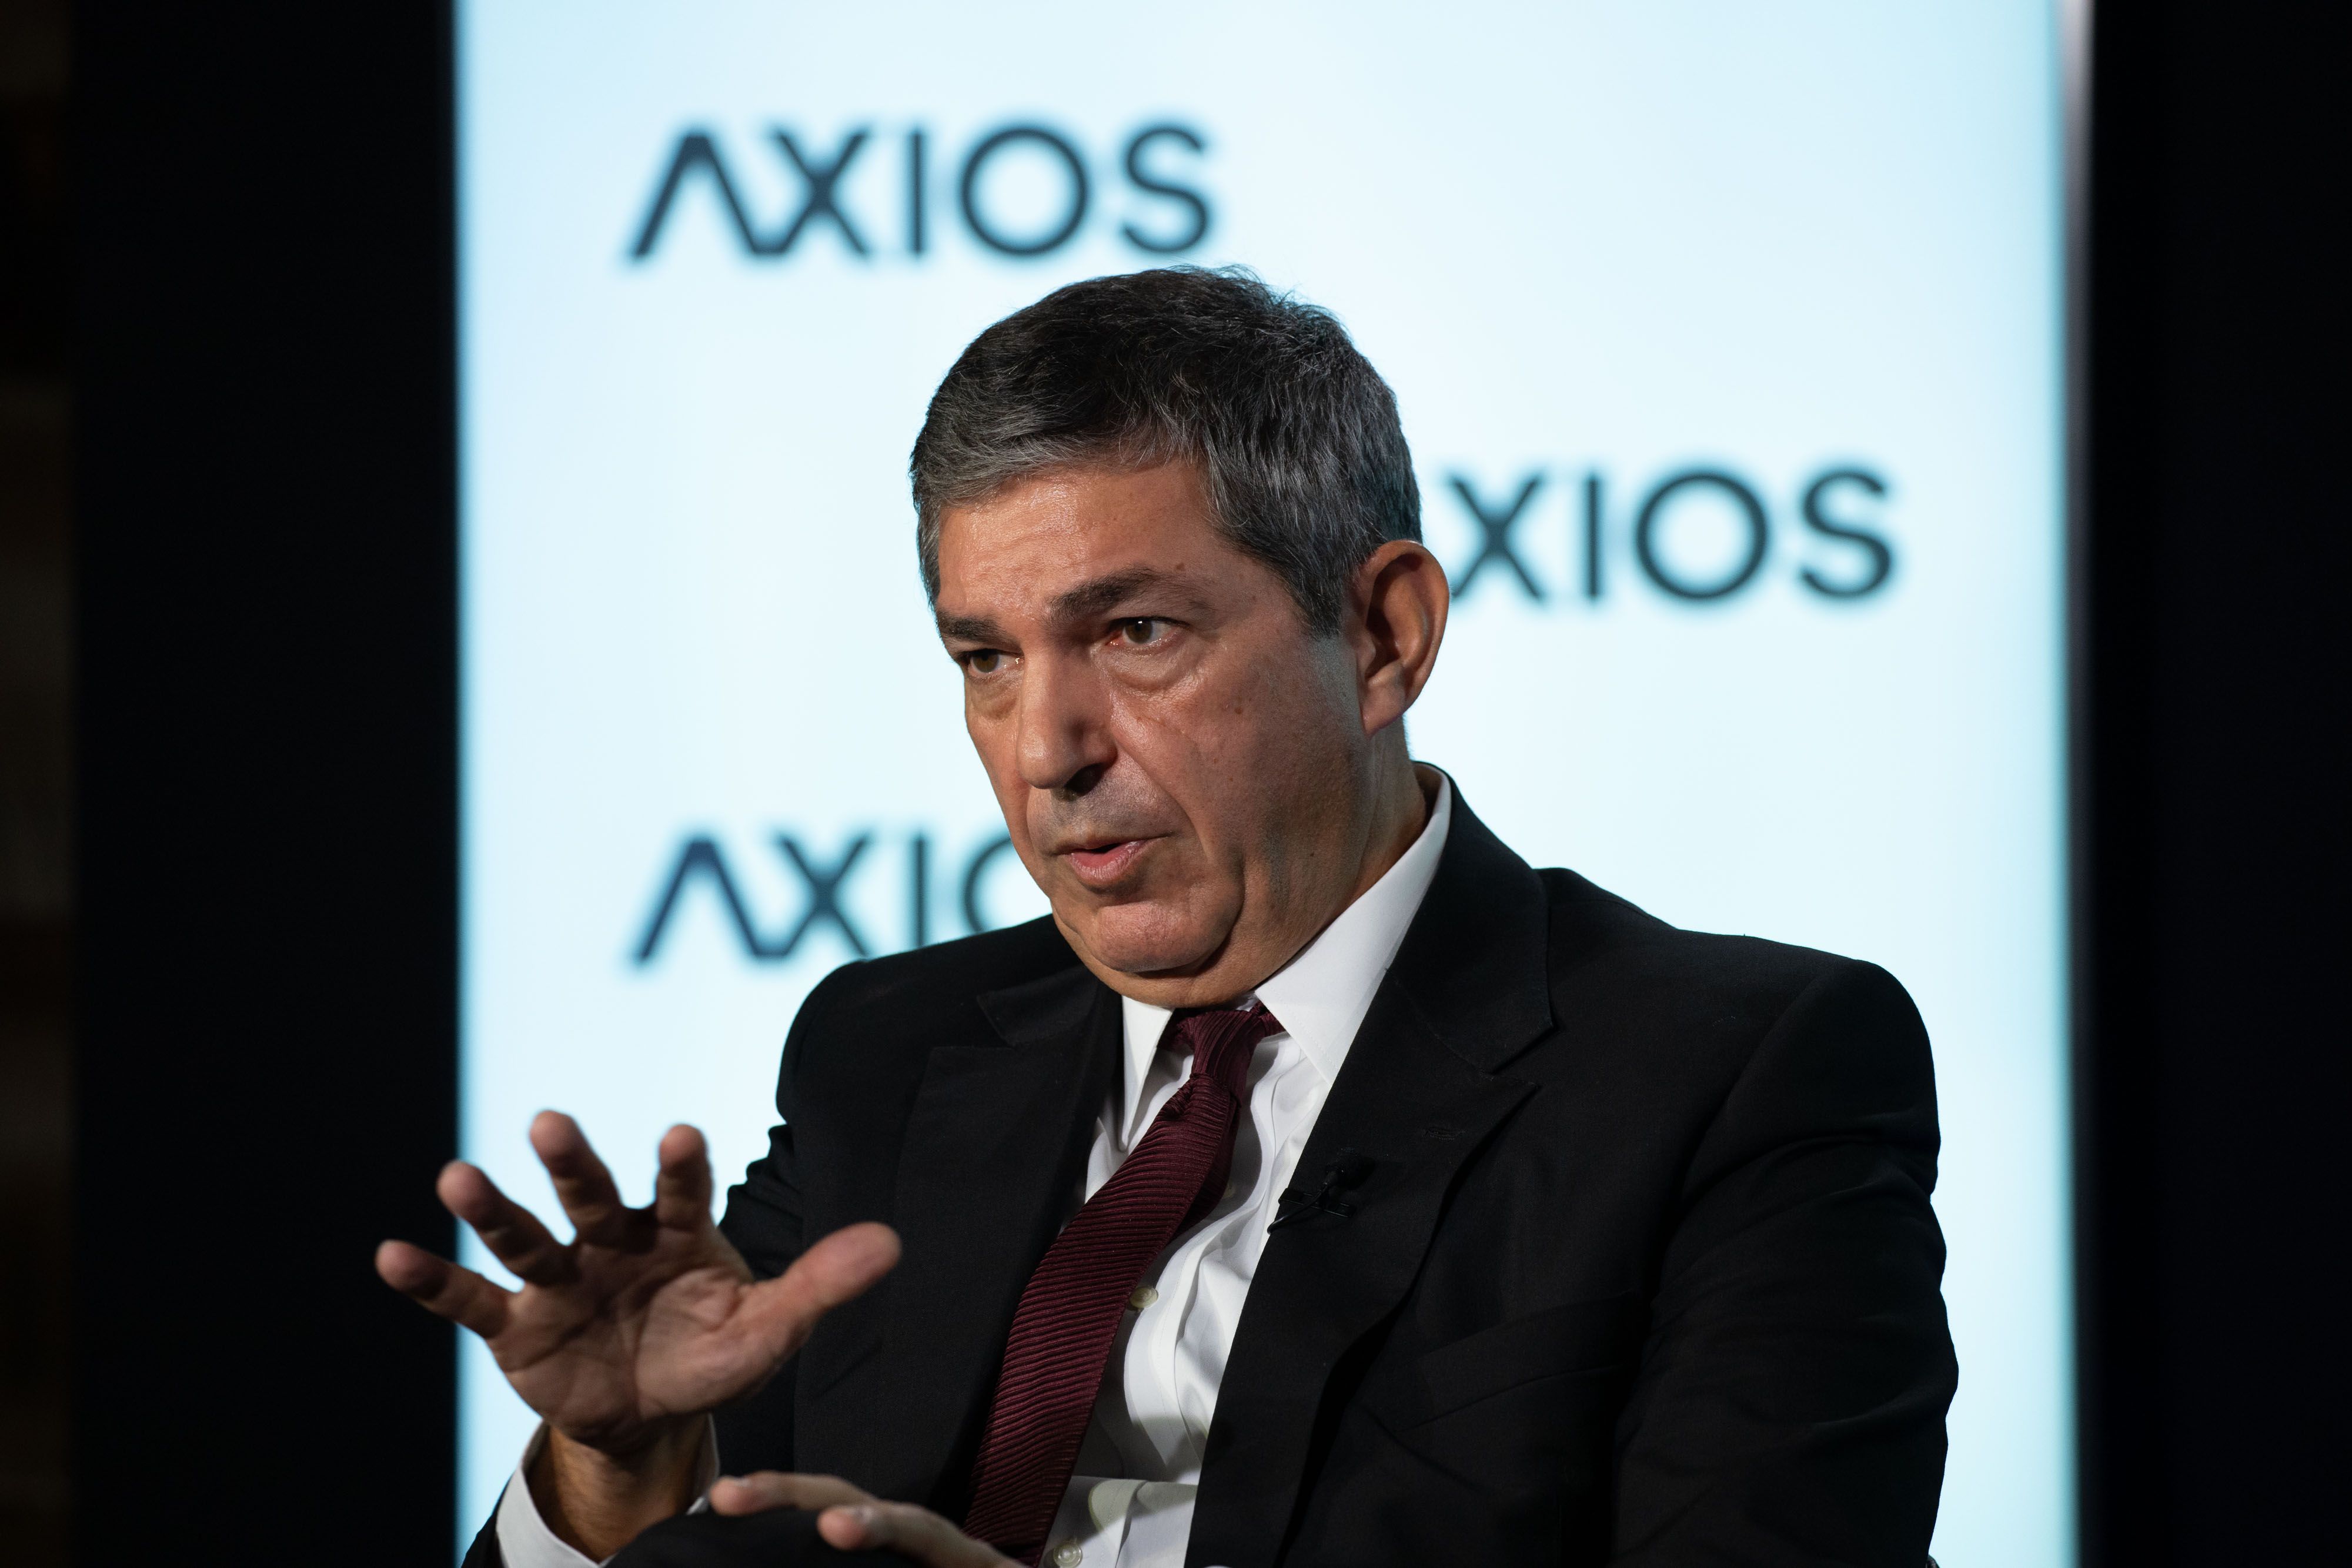 EU Ambassador to the US, Stavros Lambrinidis on the Axios stage. 